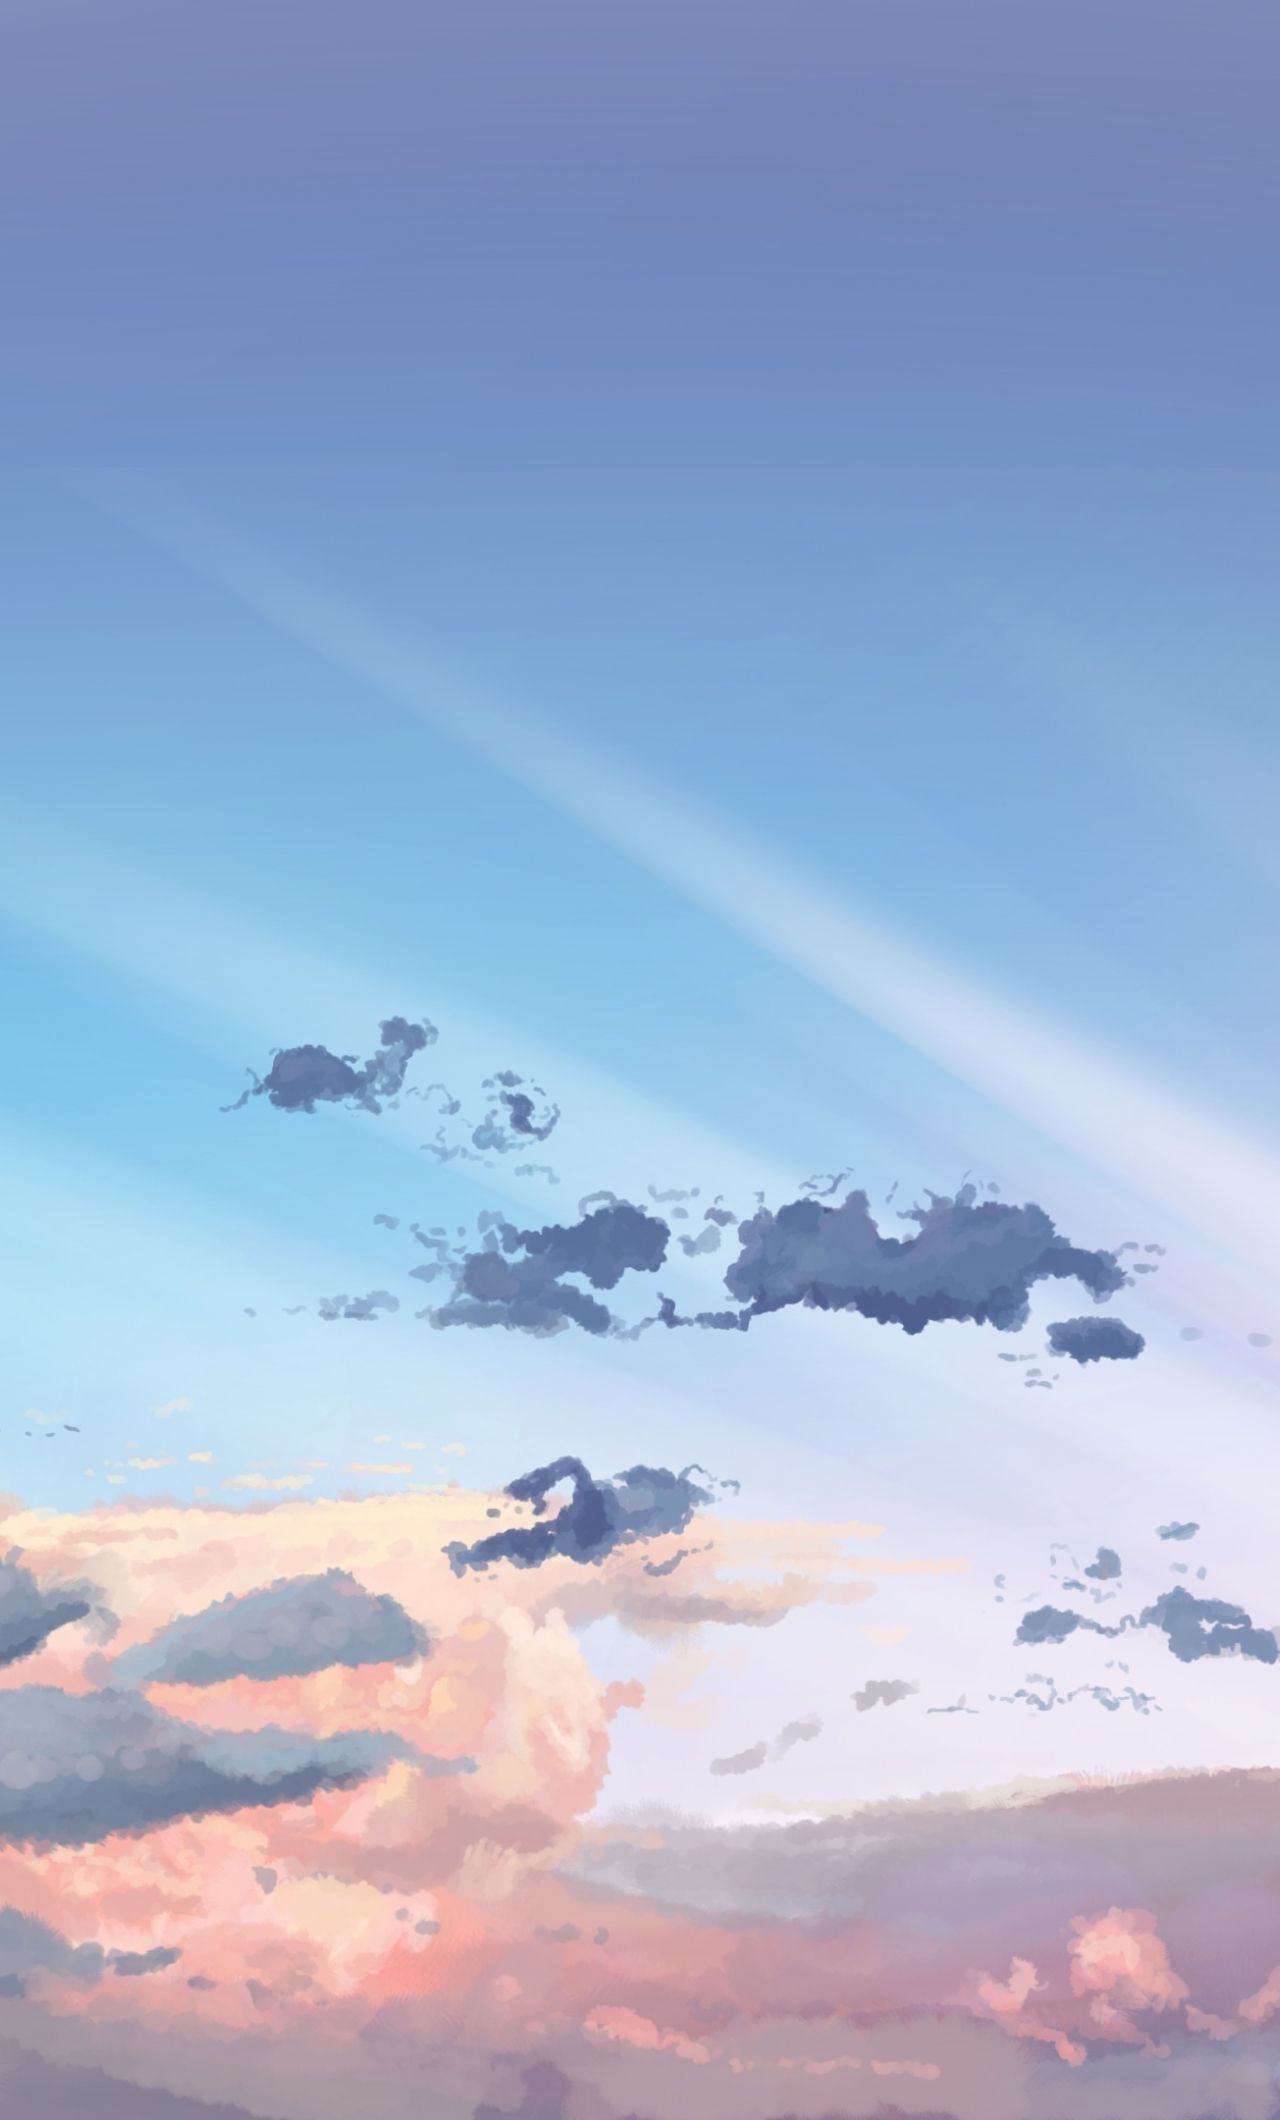 Night Sky Stars Clouds Scenery Landscape Anime 4K Wallpaper iPhone